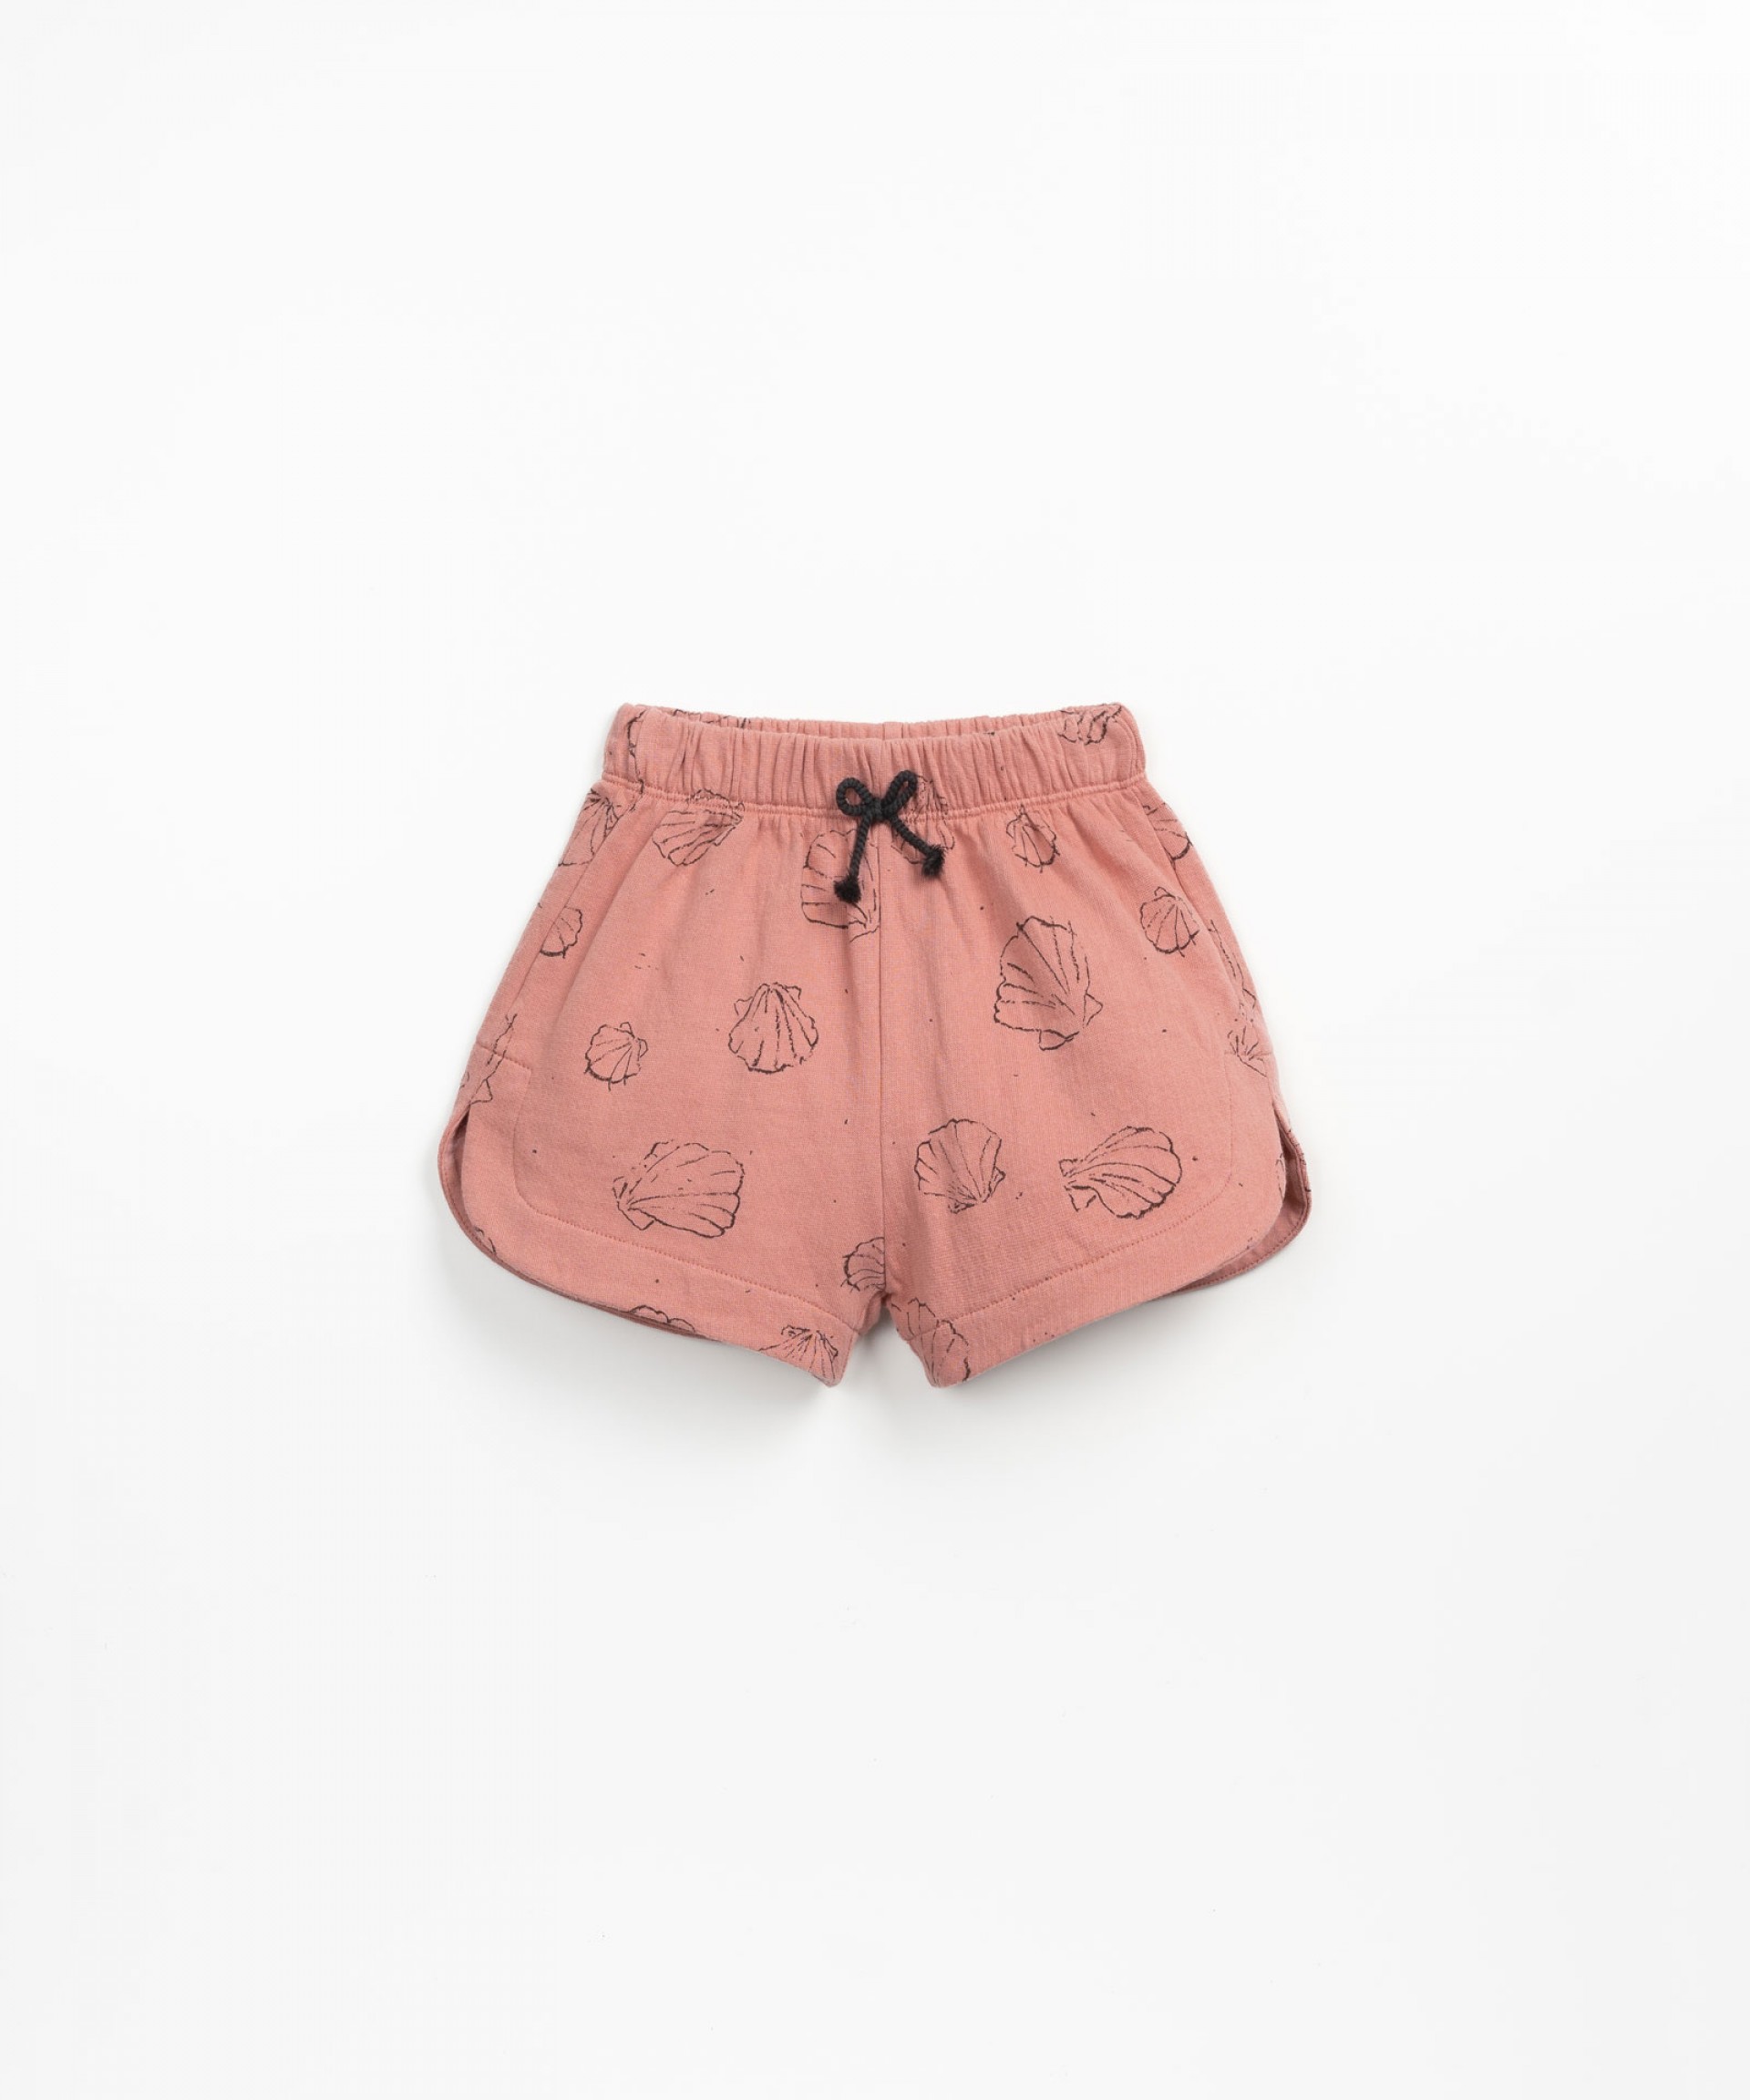 Shorts with decorative drawstring | Textile Art